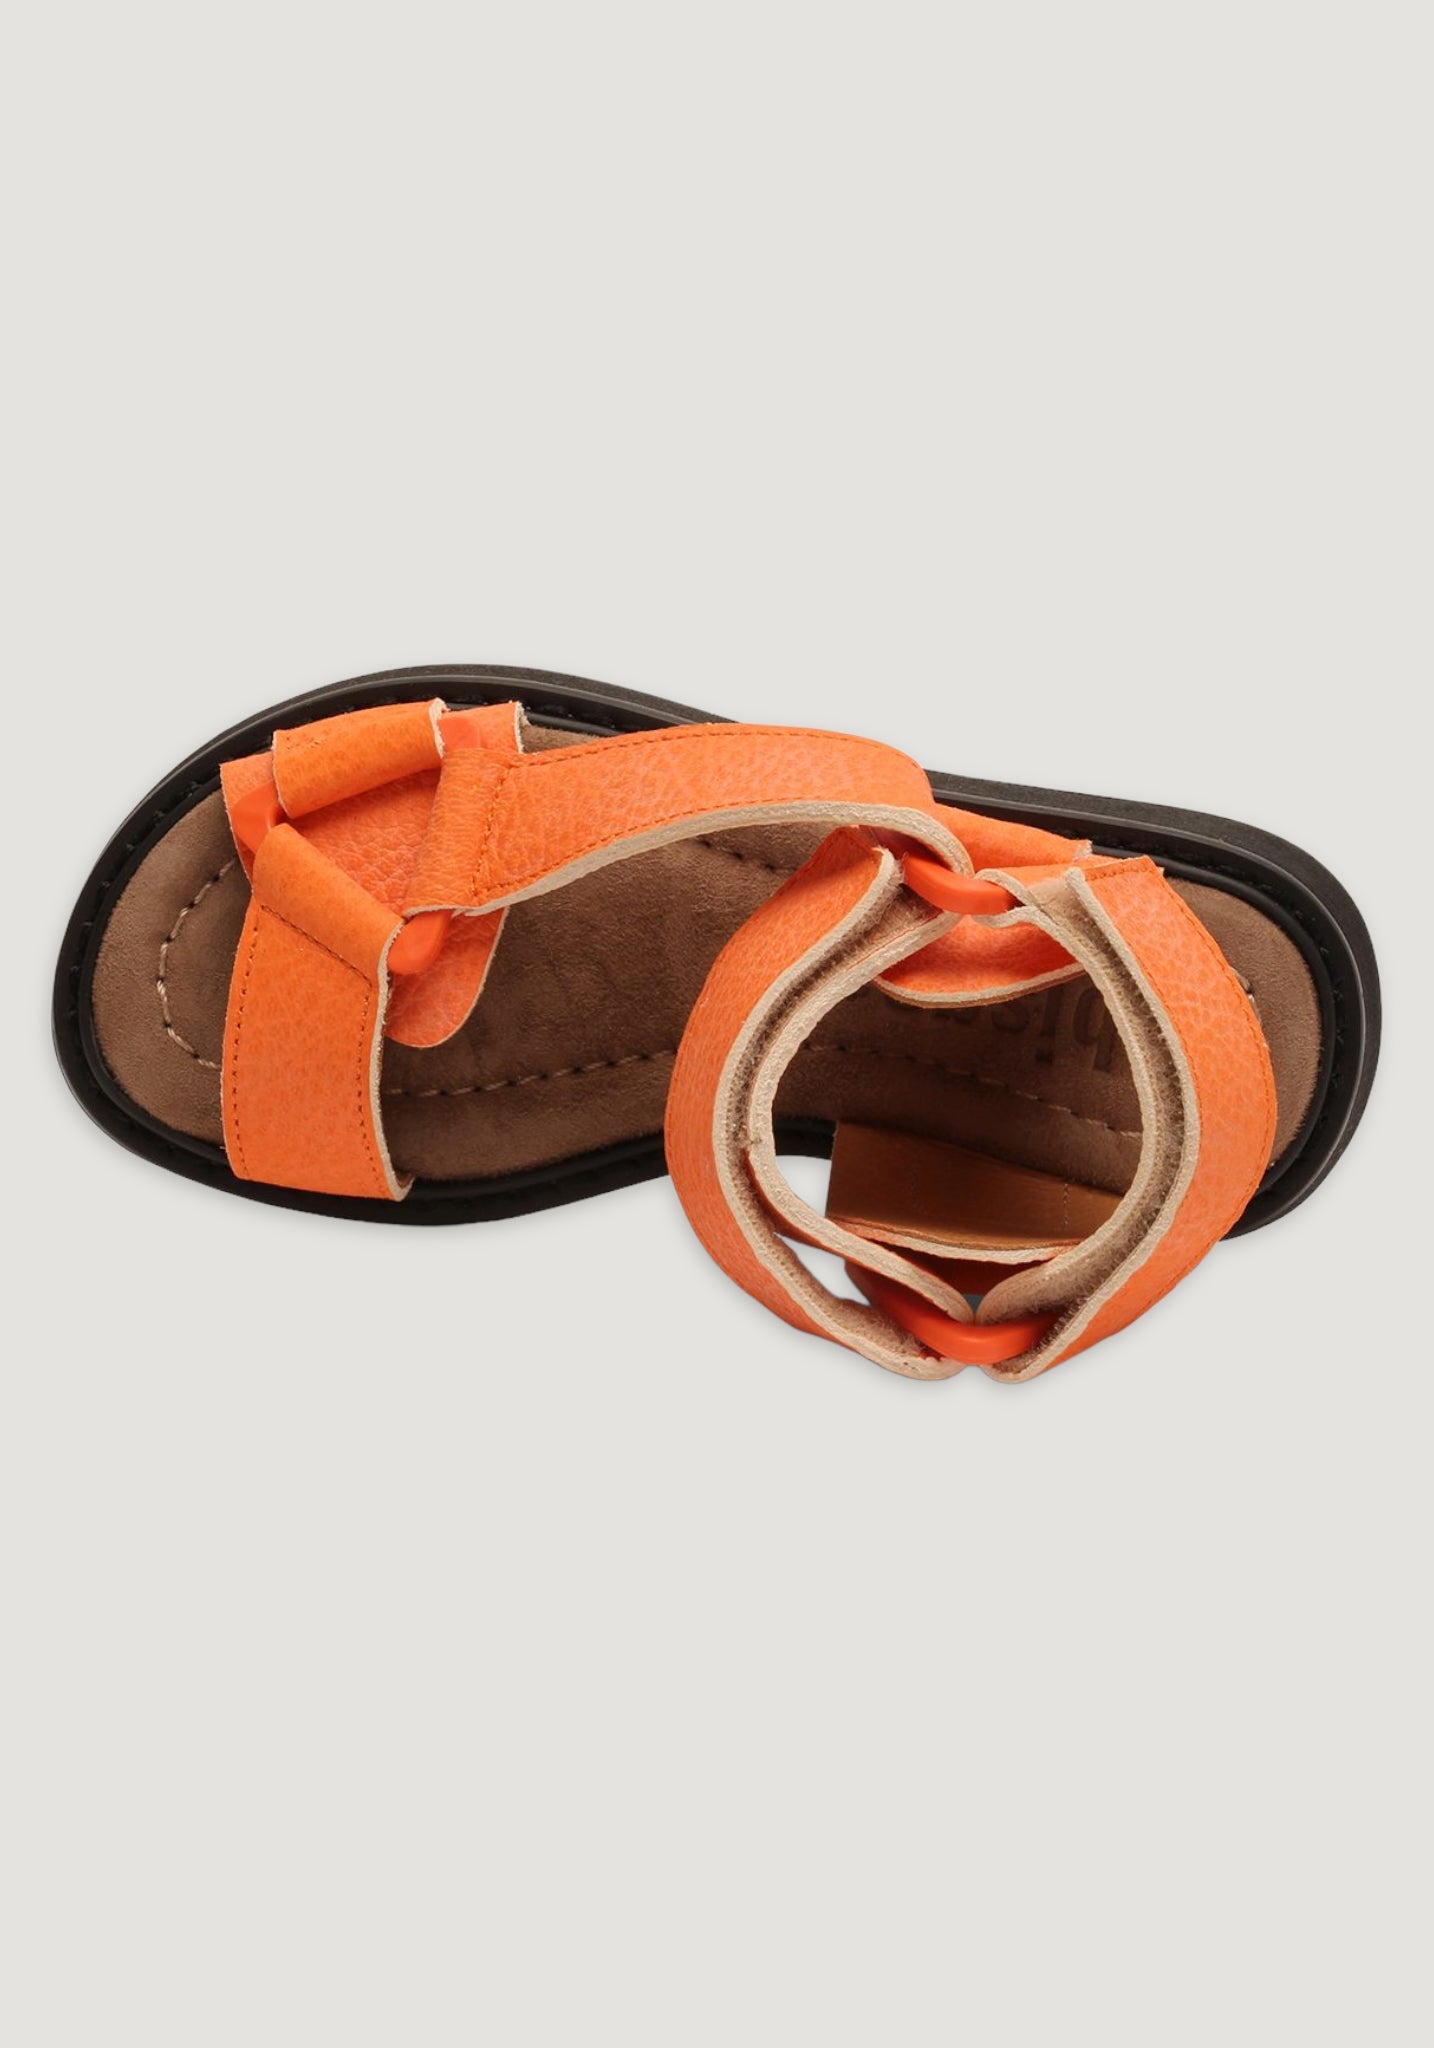 Sandale femei piele - Betina Orange 36